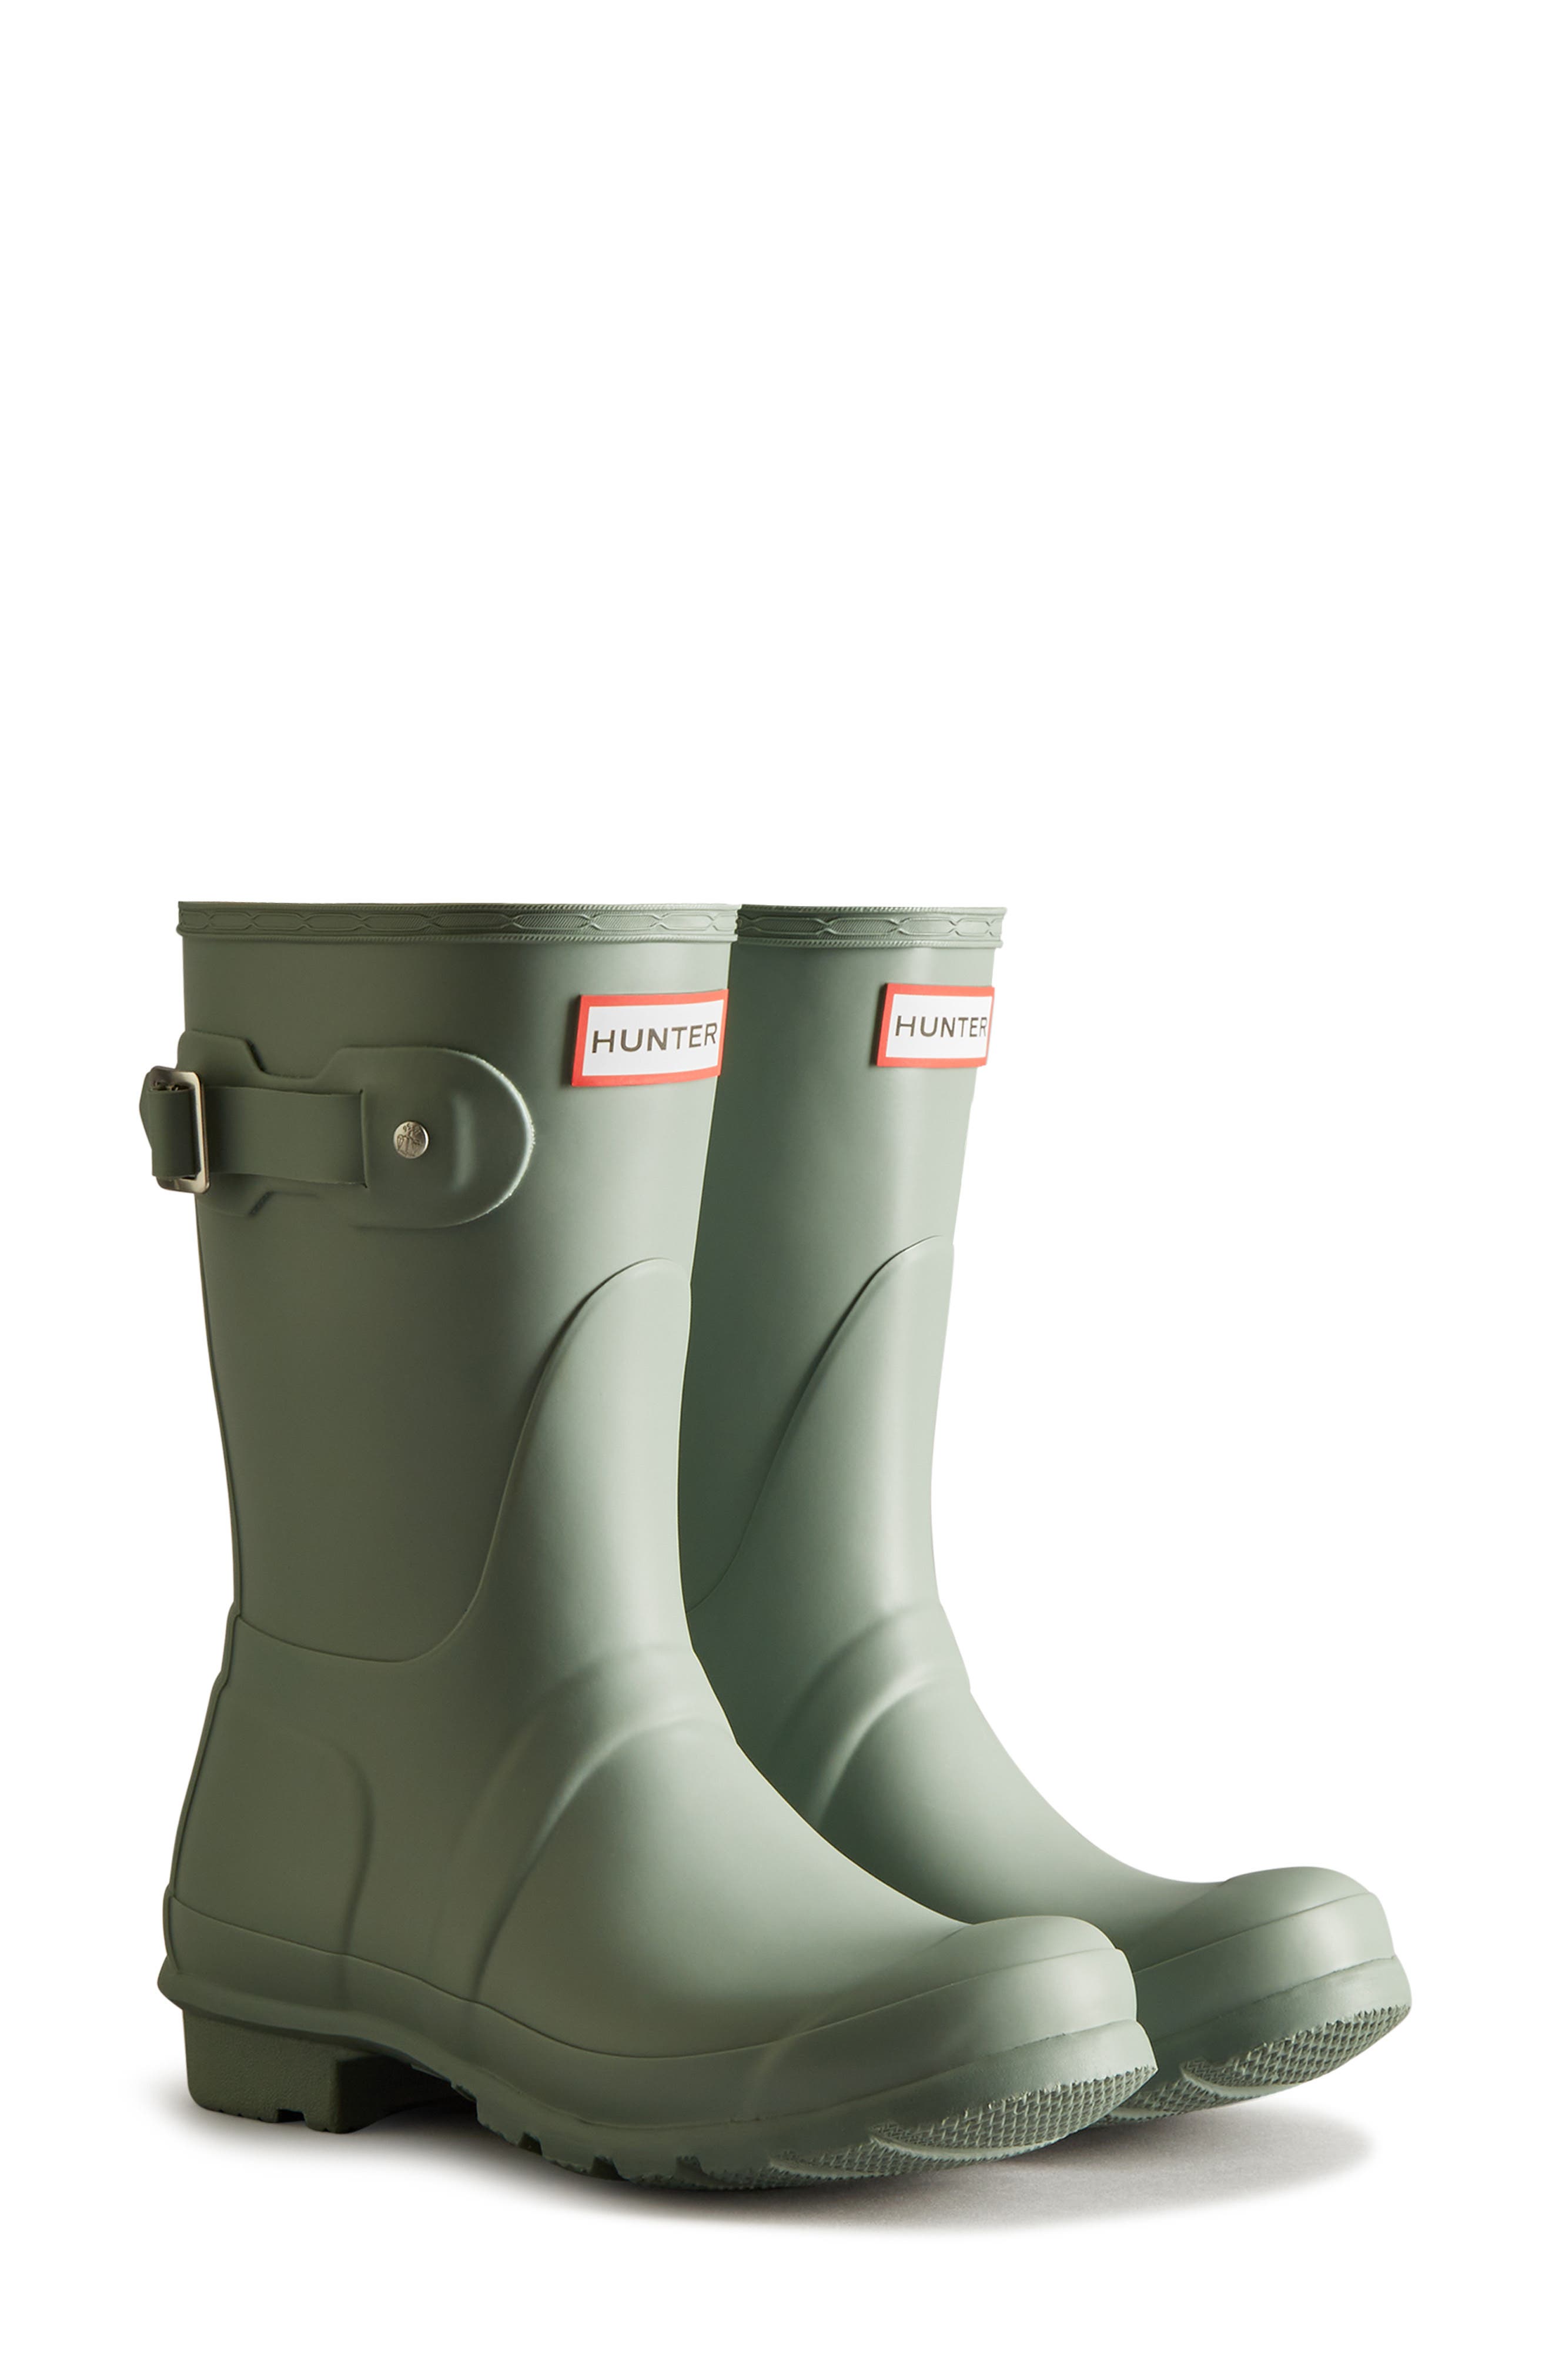 SALE New Ladies Hunter Boots Fleece Welly Socks Navy Blue Size Medium Fits 3 4 5